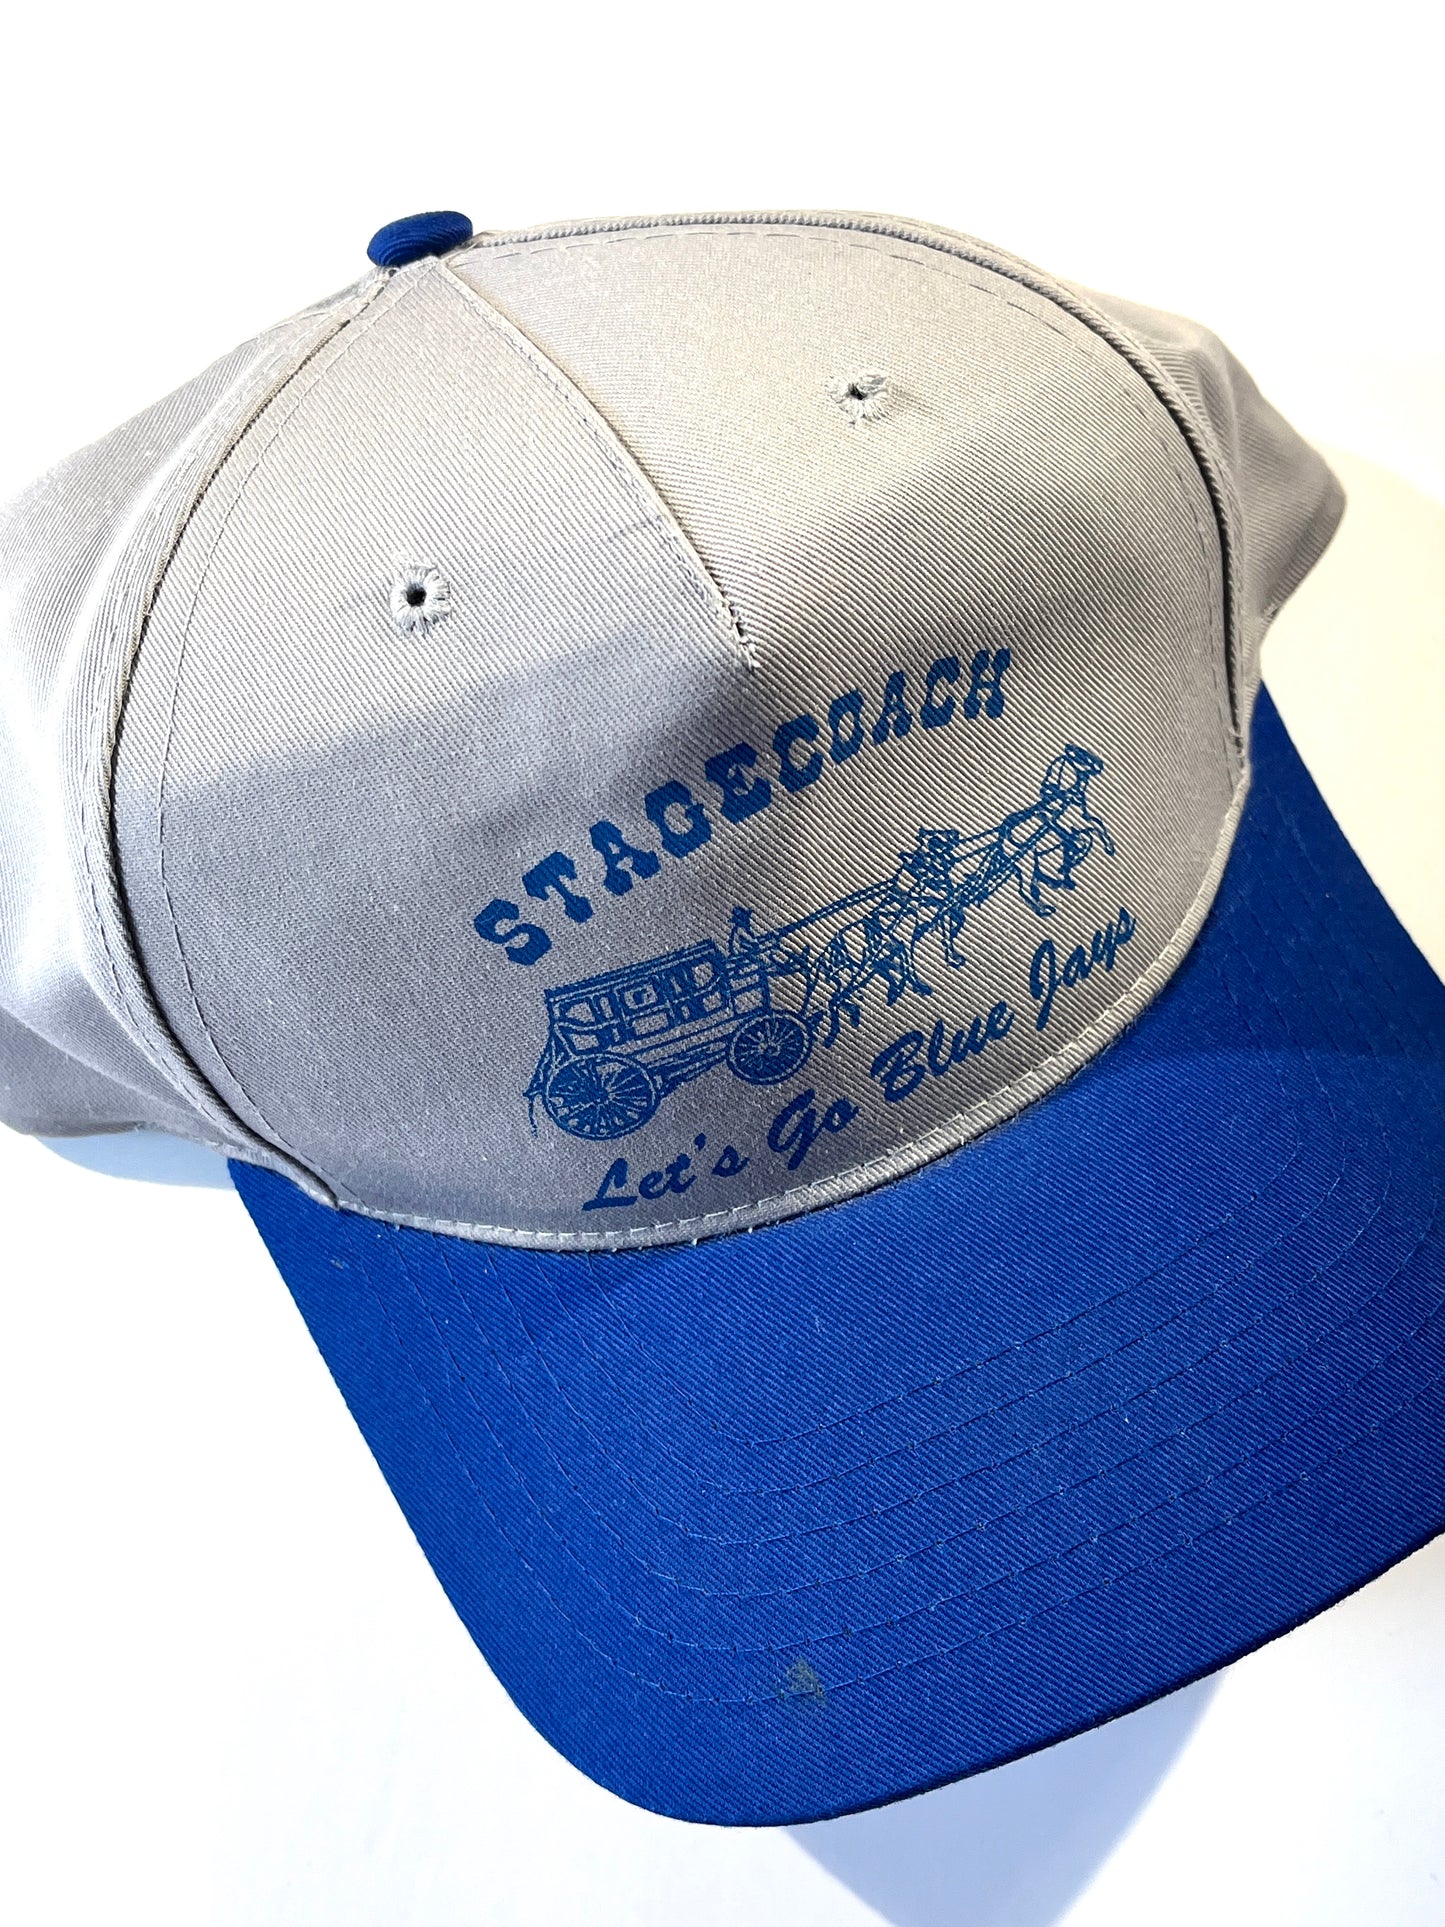 Vintage Stage Coach Hat Trucker Snapback Lets Go Blue Jays